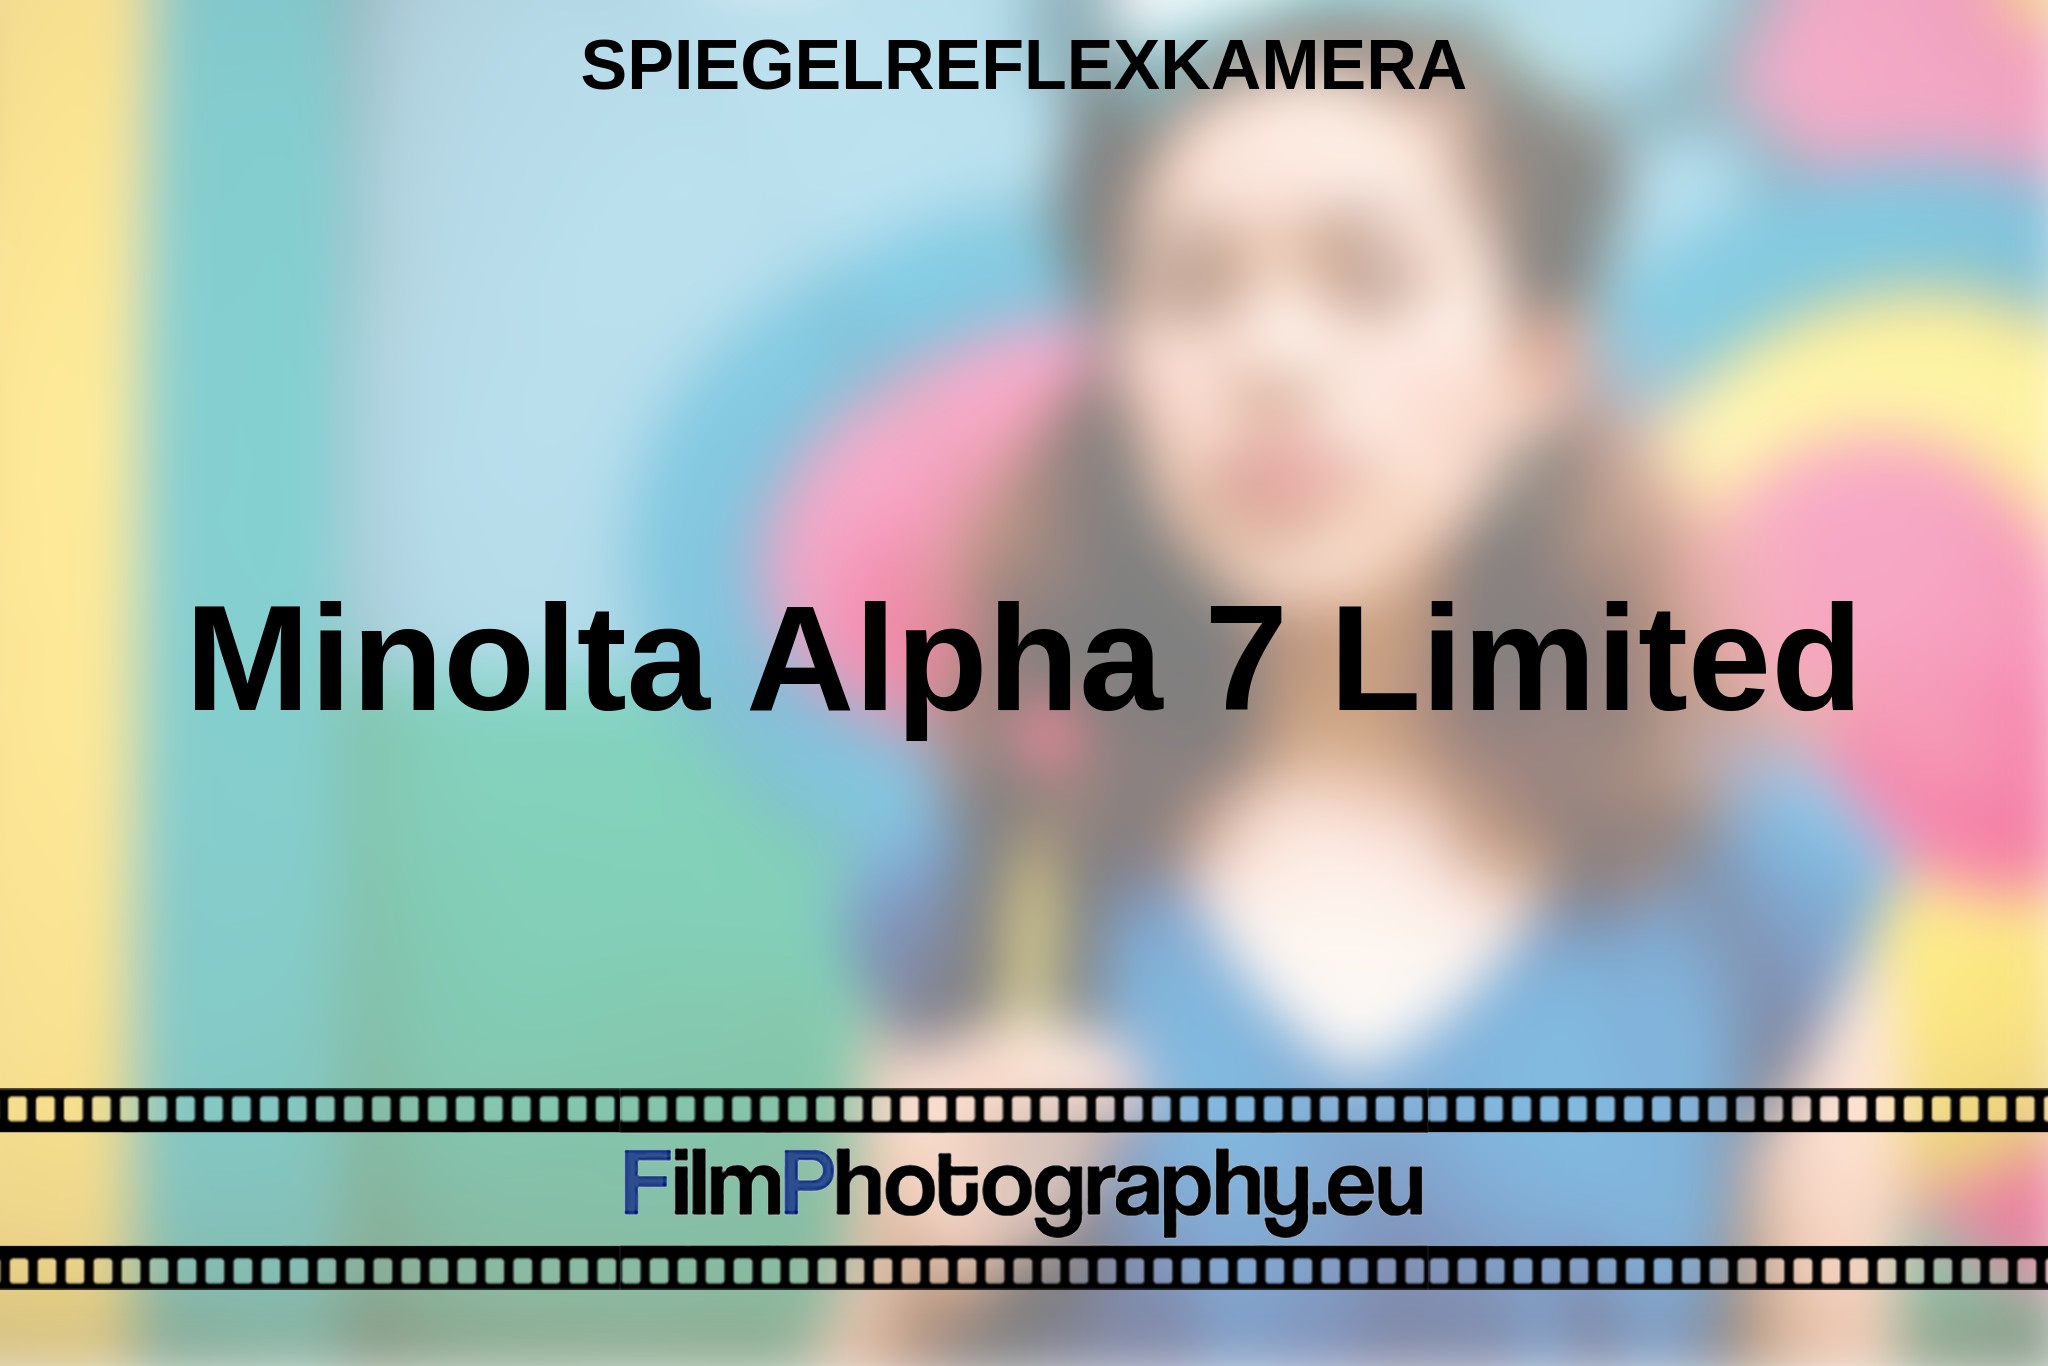 minolta-alpha-7-limited-spiegelreflexkamera-bnv.jpg